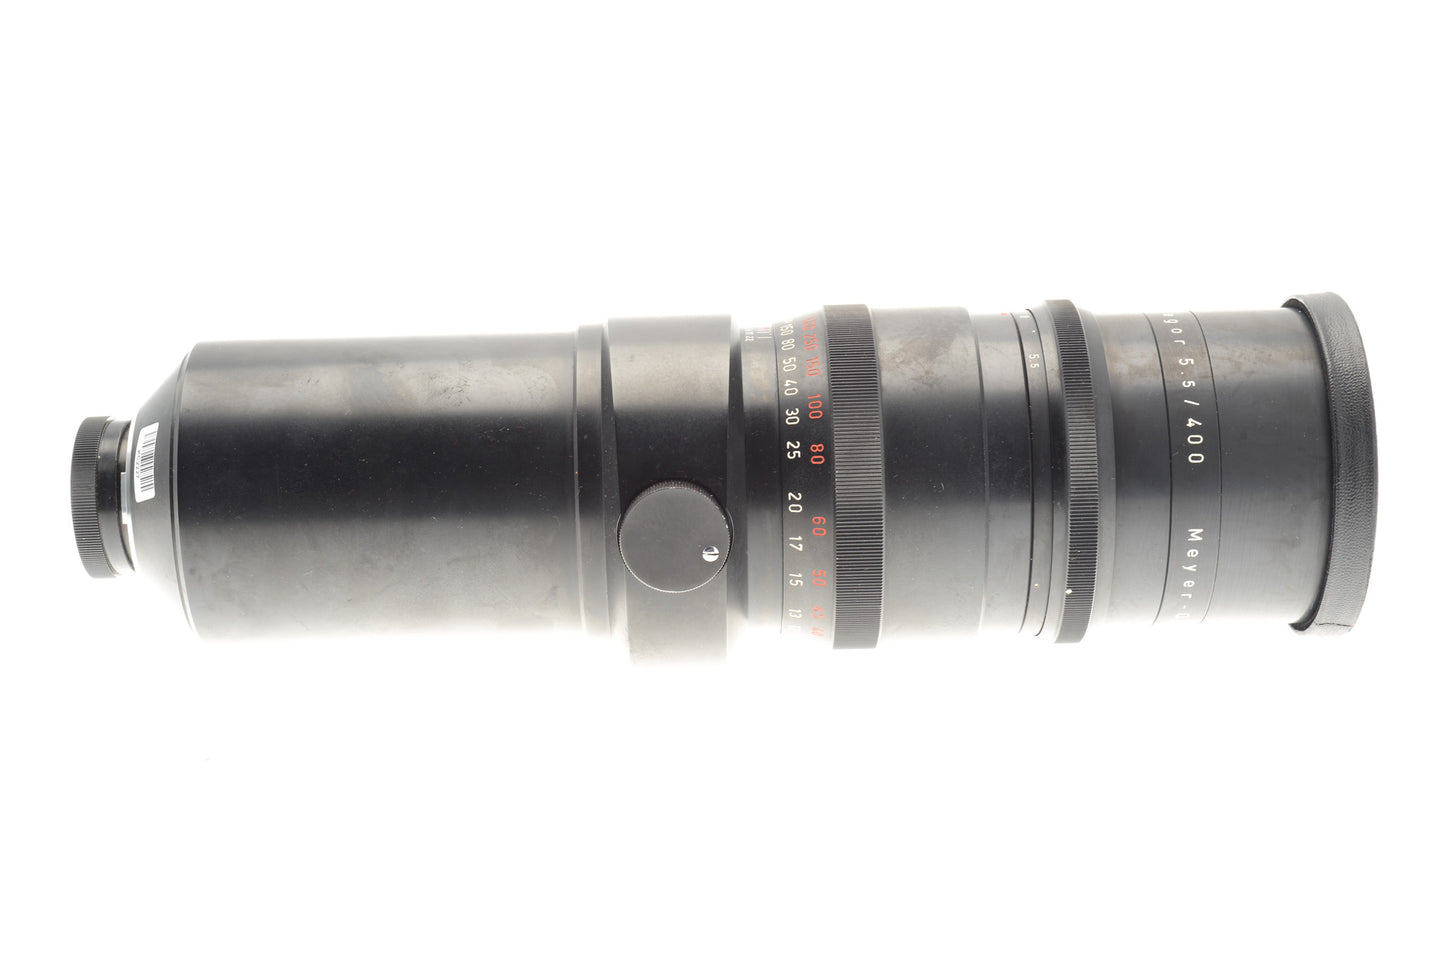 Meyer-Optik Görlitz 400mm f5.5 Telemegor - Lens